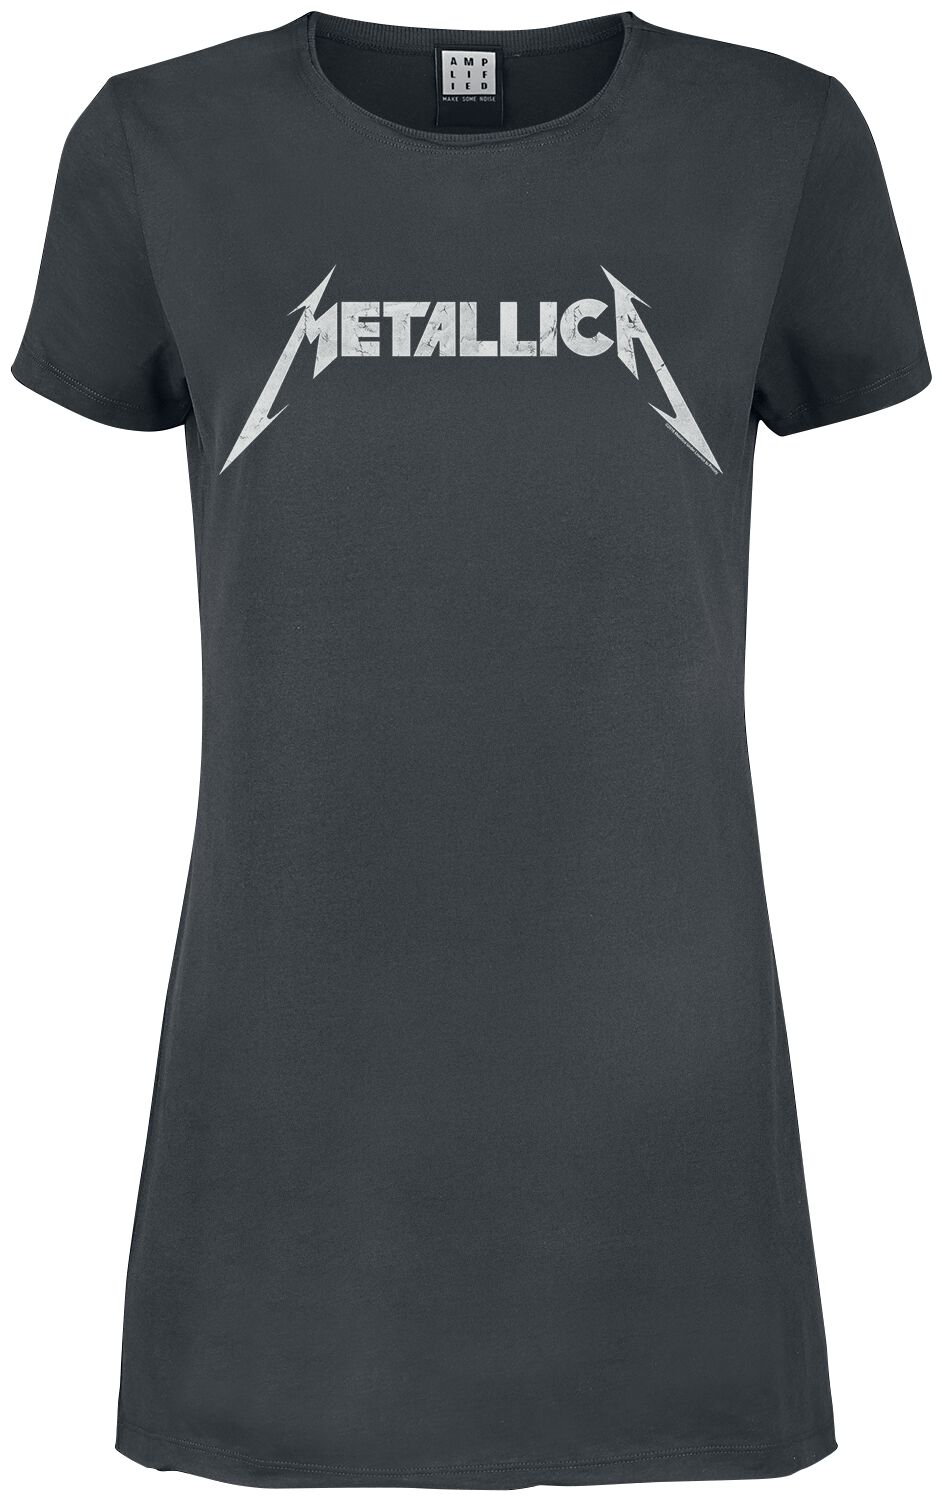 Metallica - Amplified Collection - Logo - Kurzes Kleid - charcoal